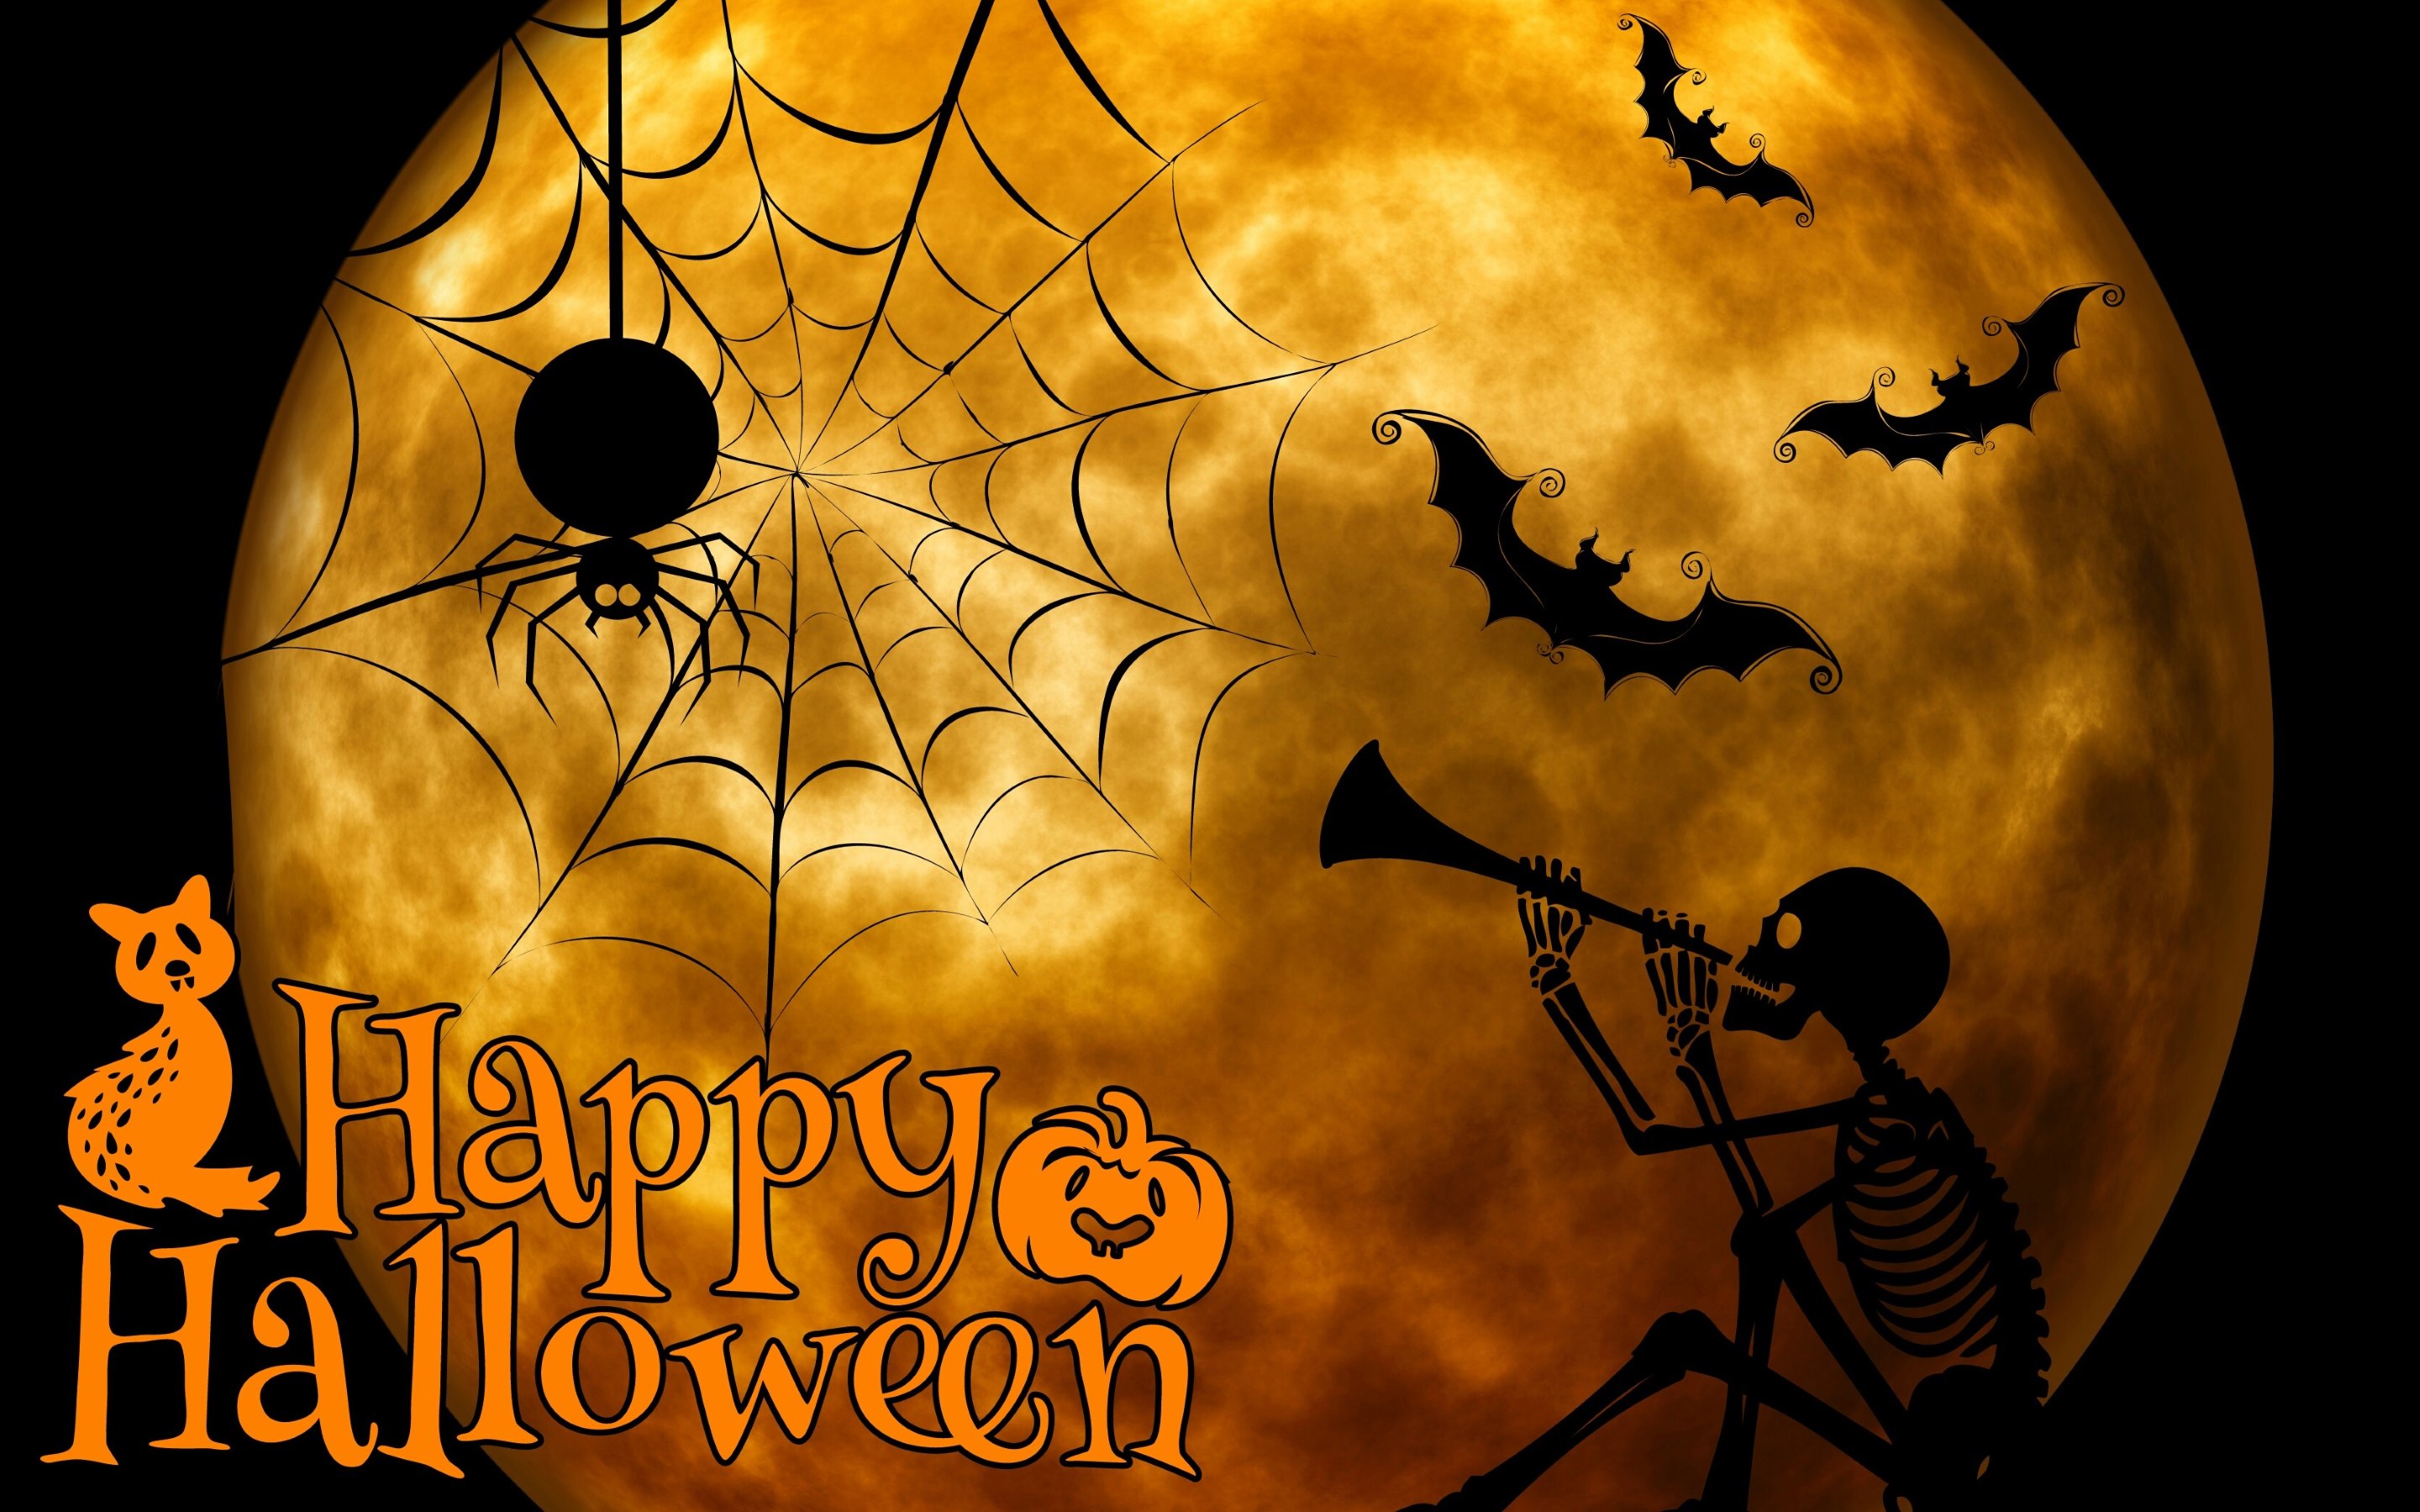 holiday, halloween, bat, skeleton, spider